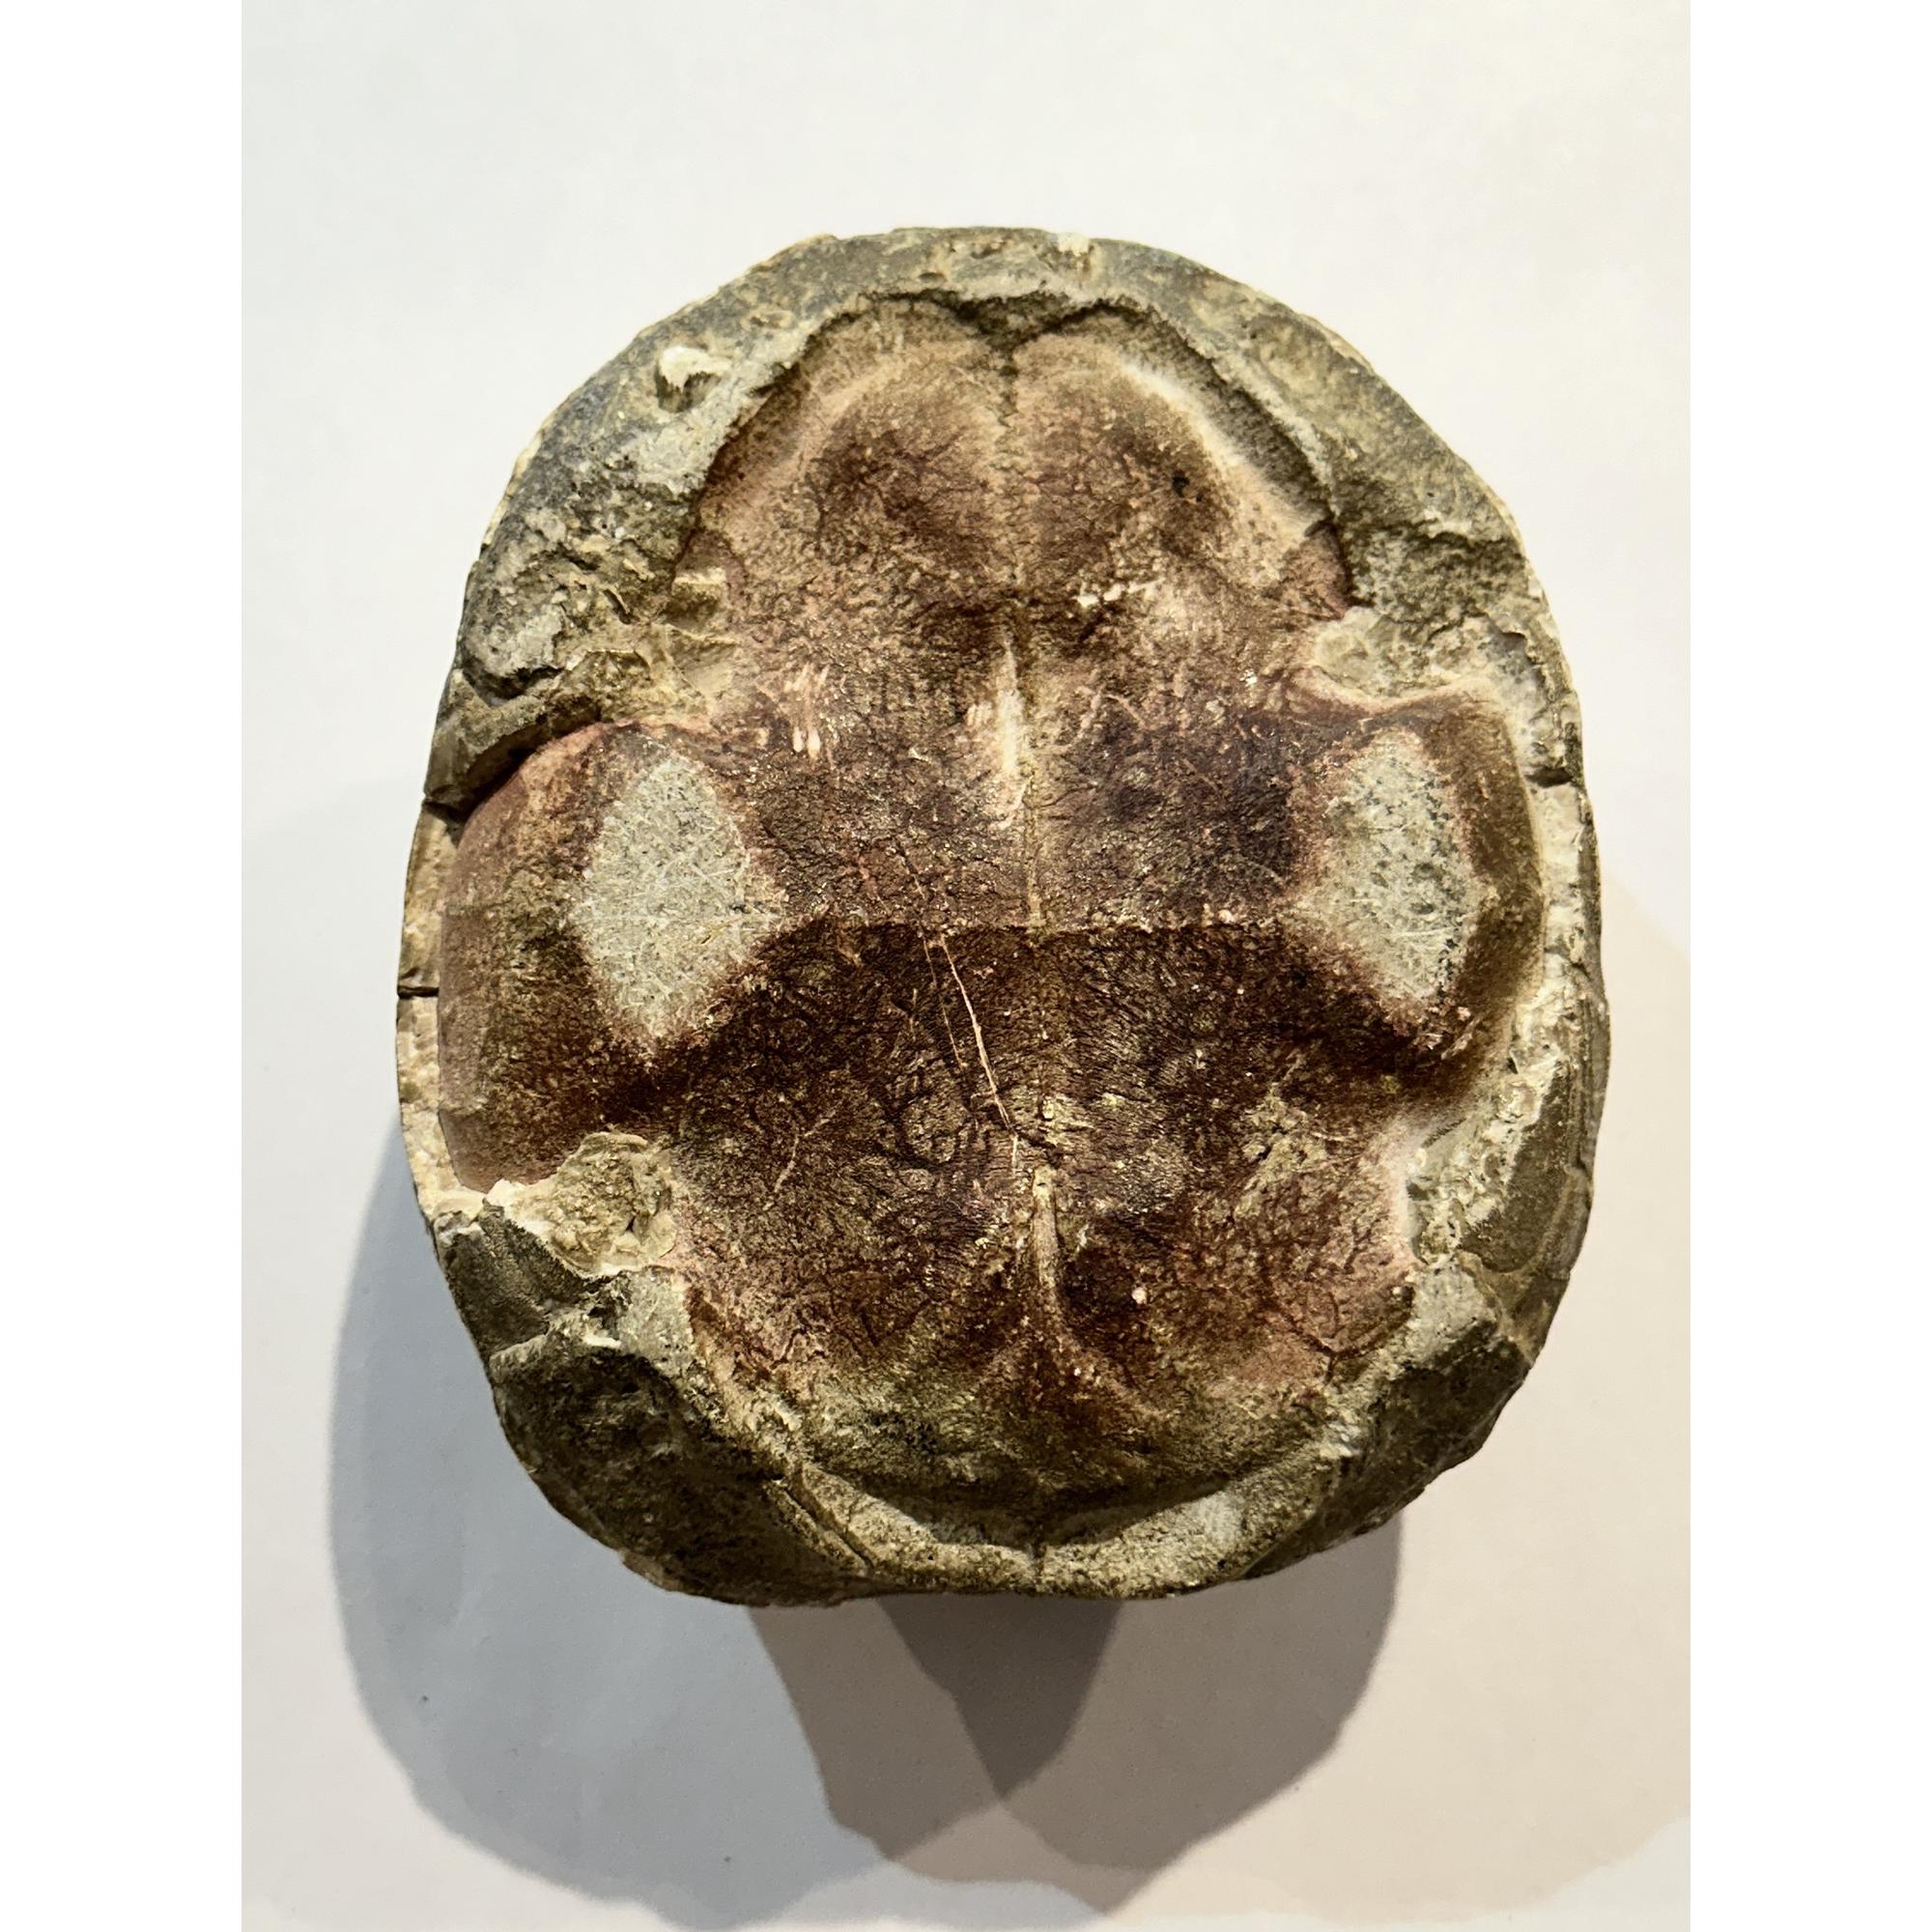 Turtle Fossil, South Dakota Prehistoric Online